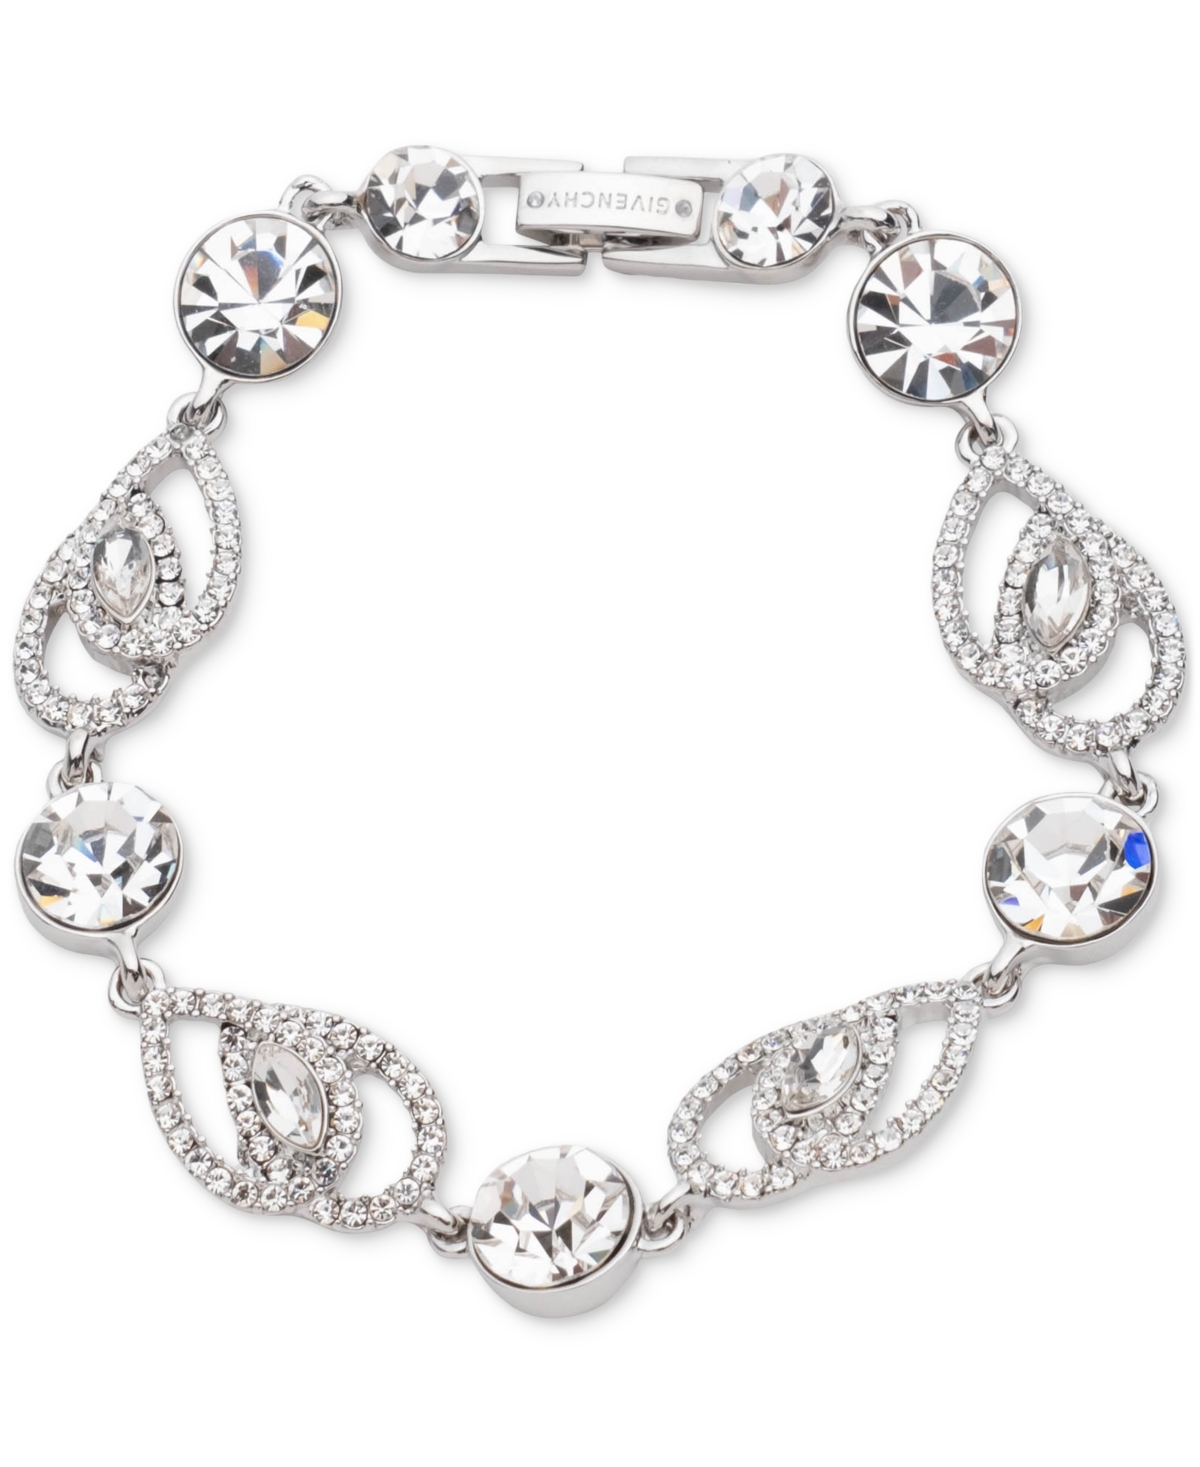 Silver-Tone Crystal Pave Pear Stone Flex Bracelet - White